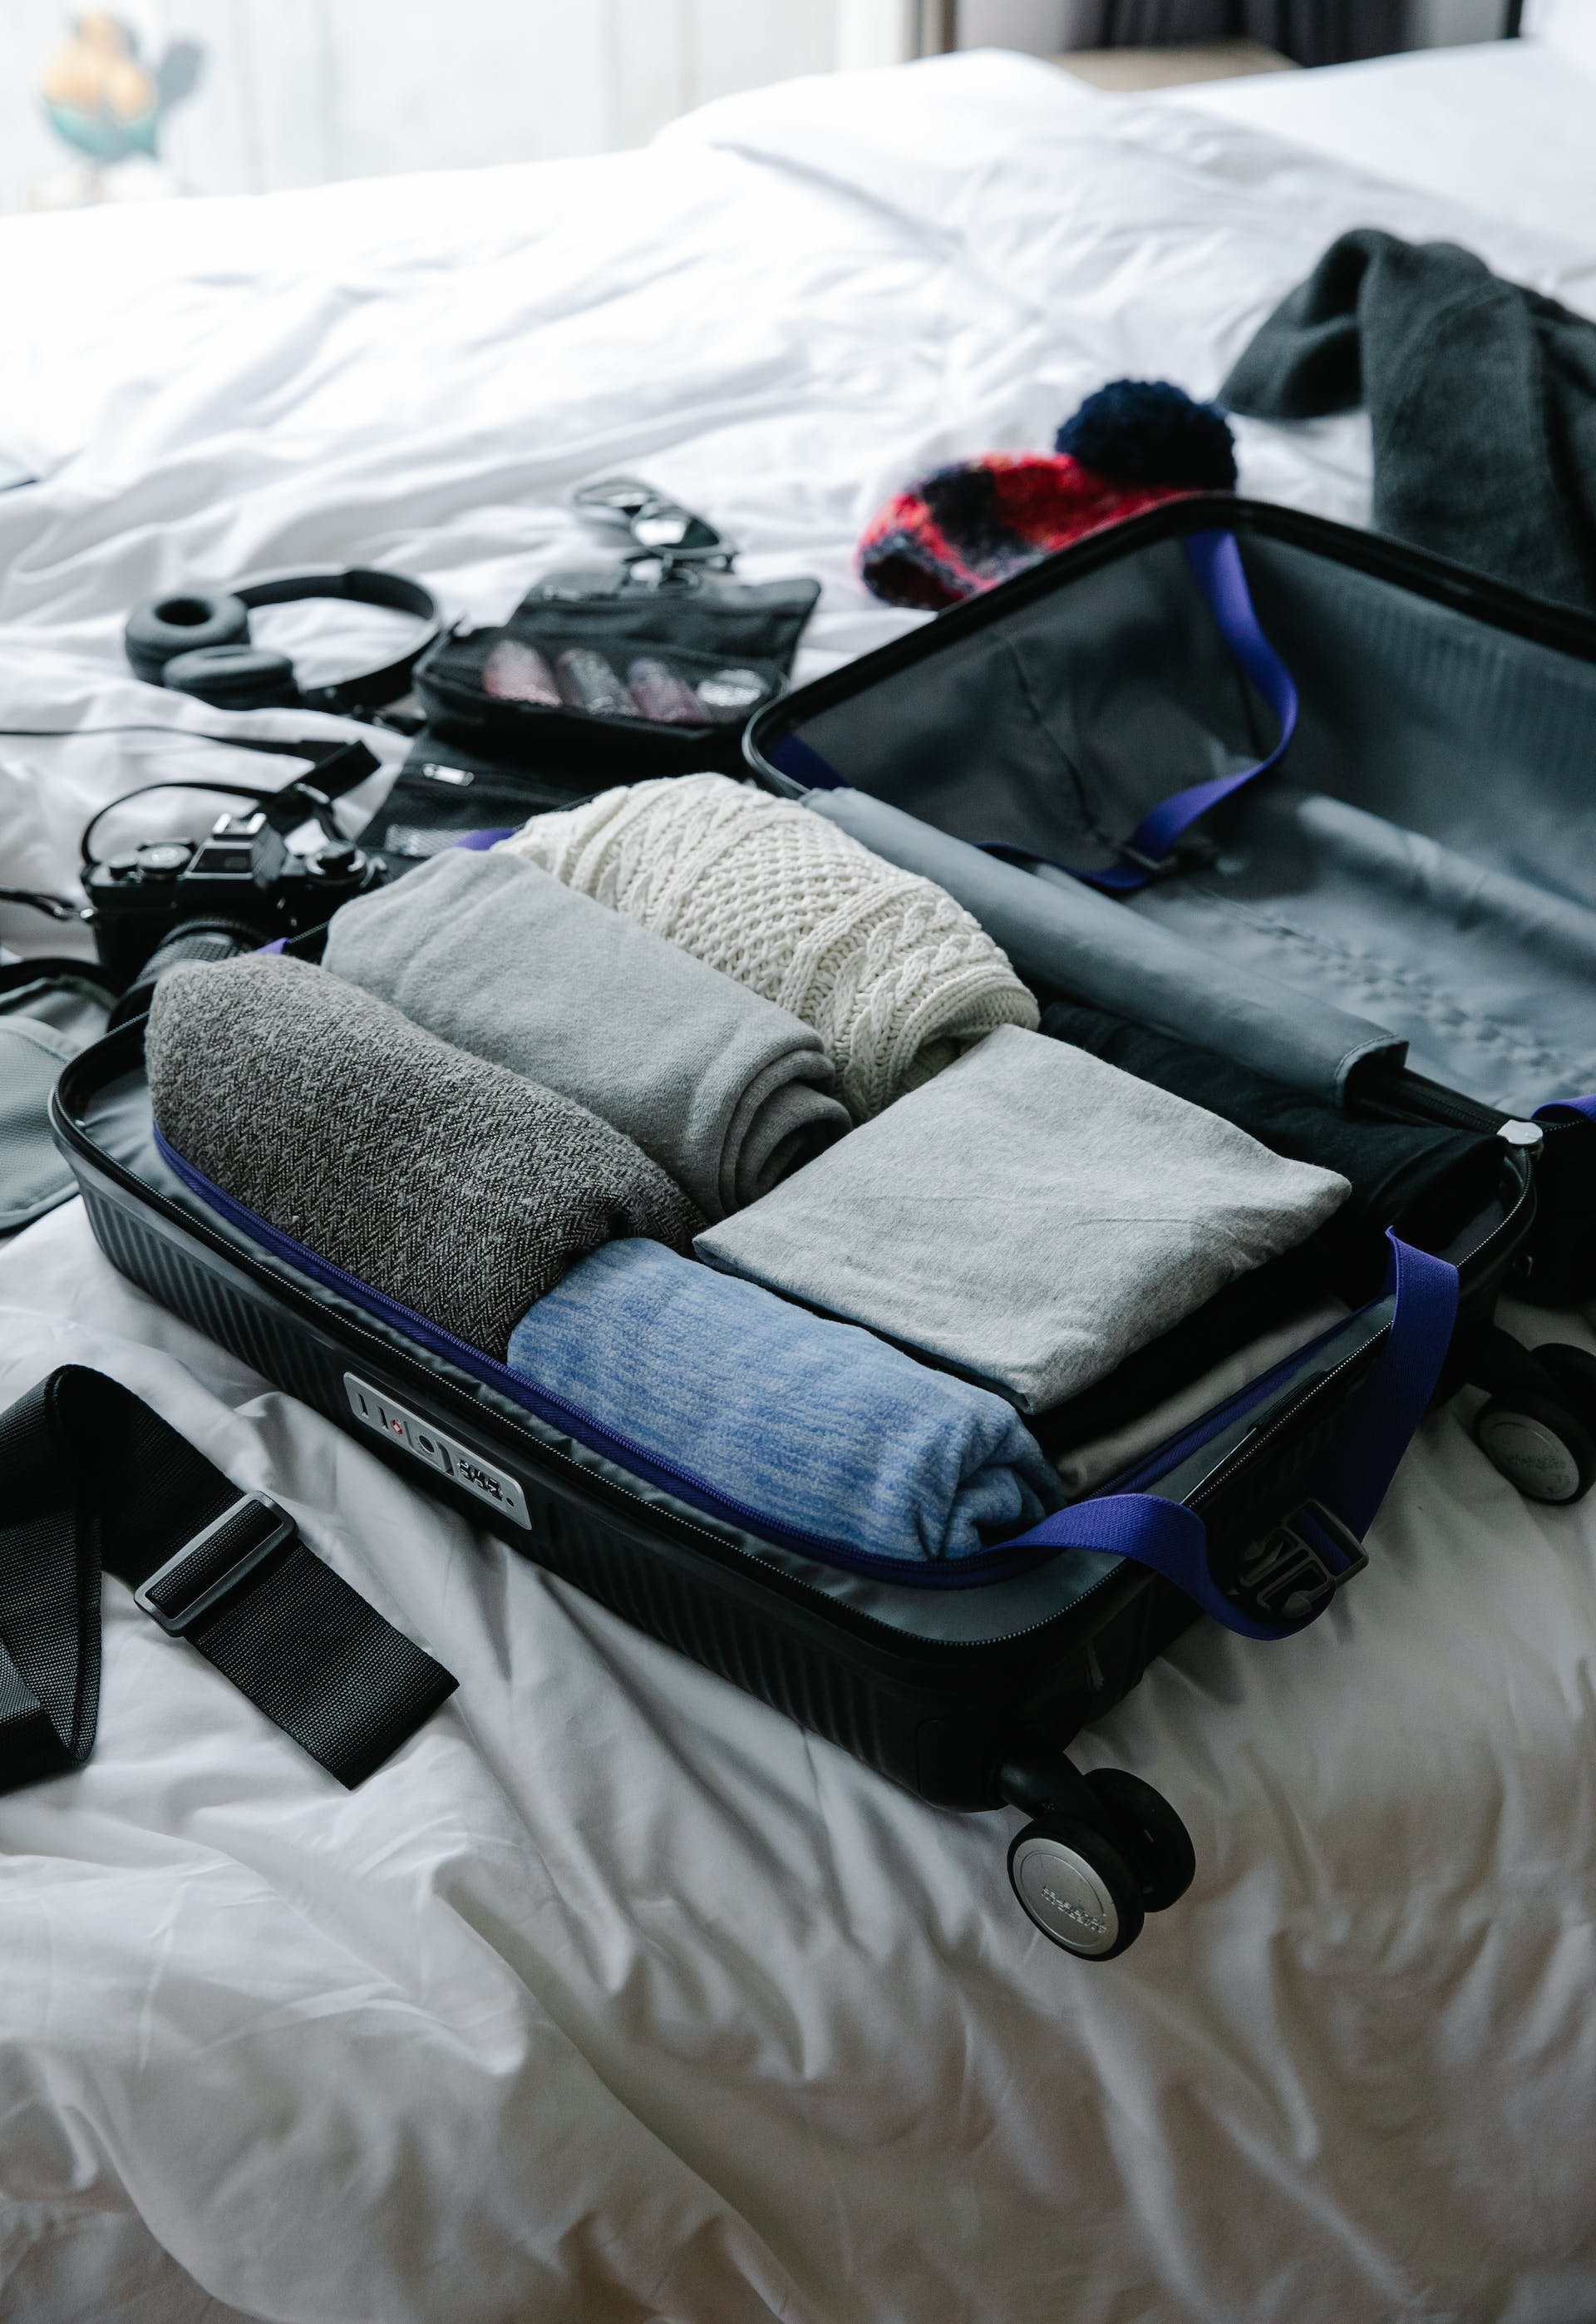 Offener Koffer auf dem Bett | Quelle: Pexels